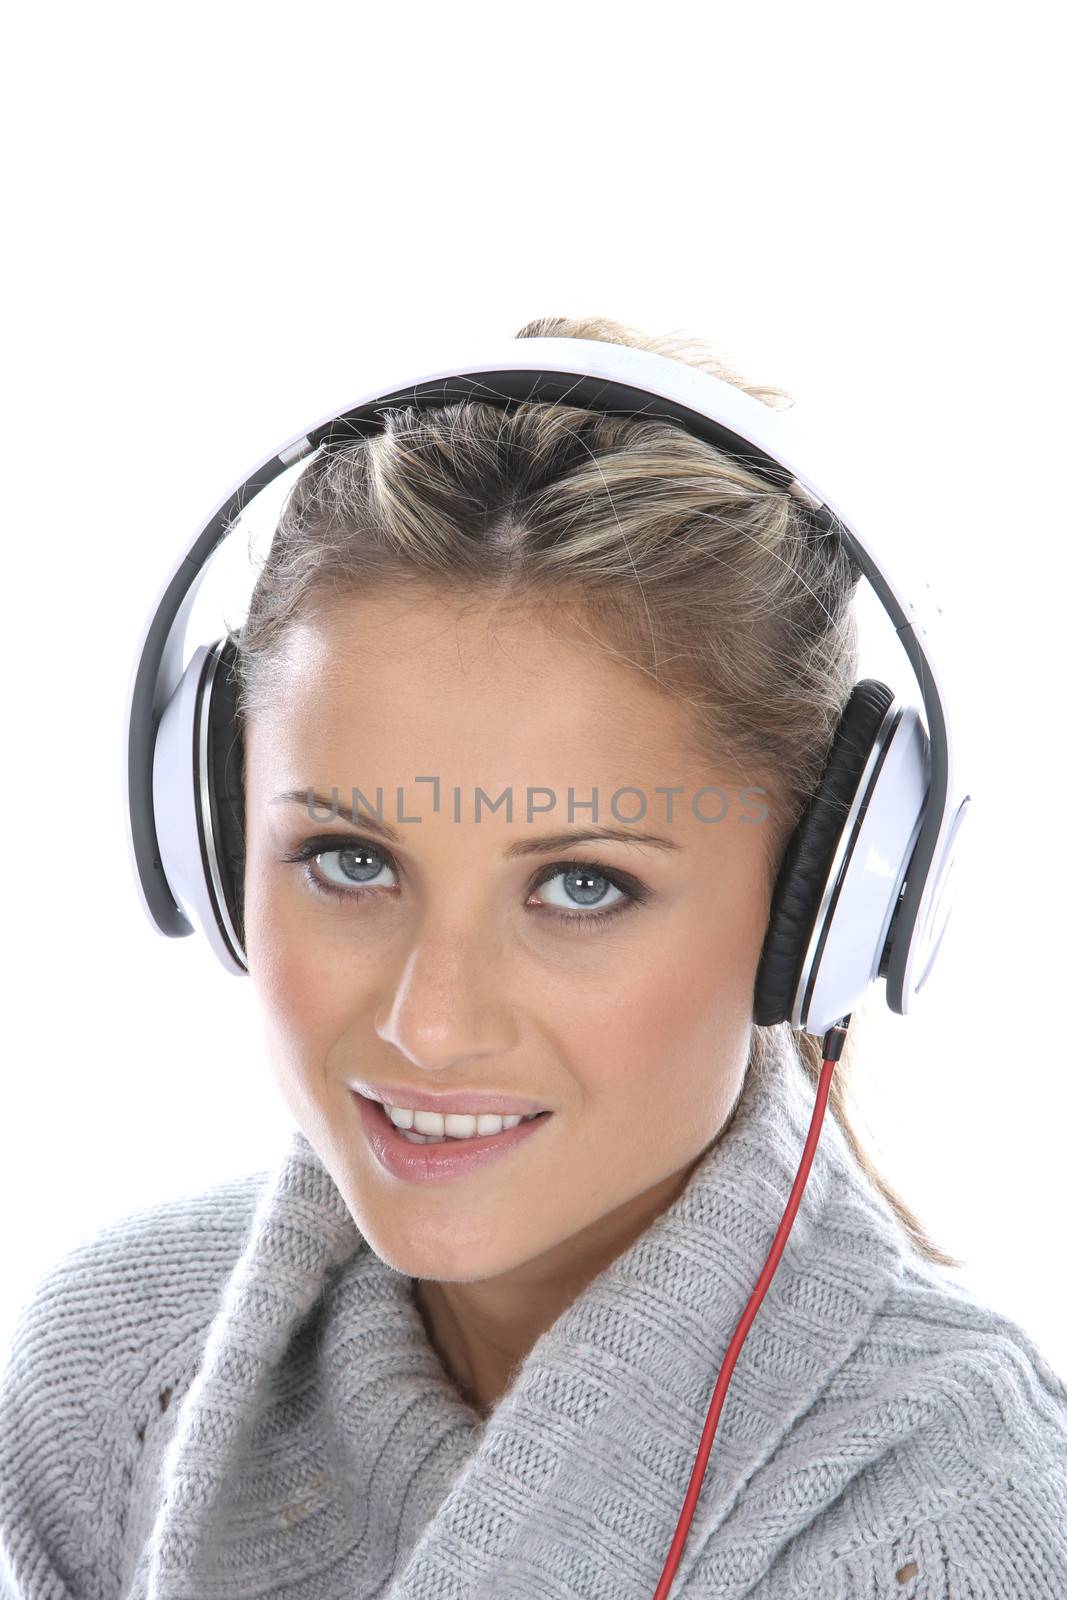 Woman Wearing Headphones